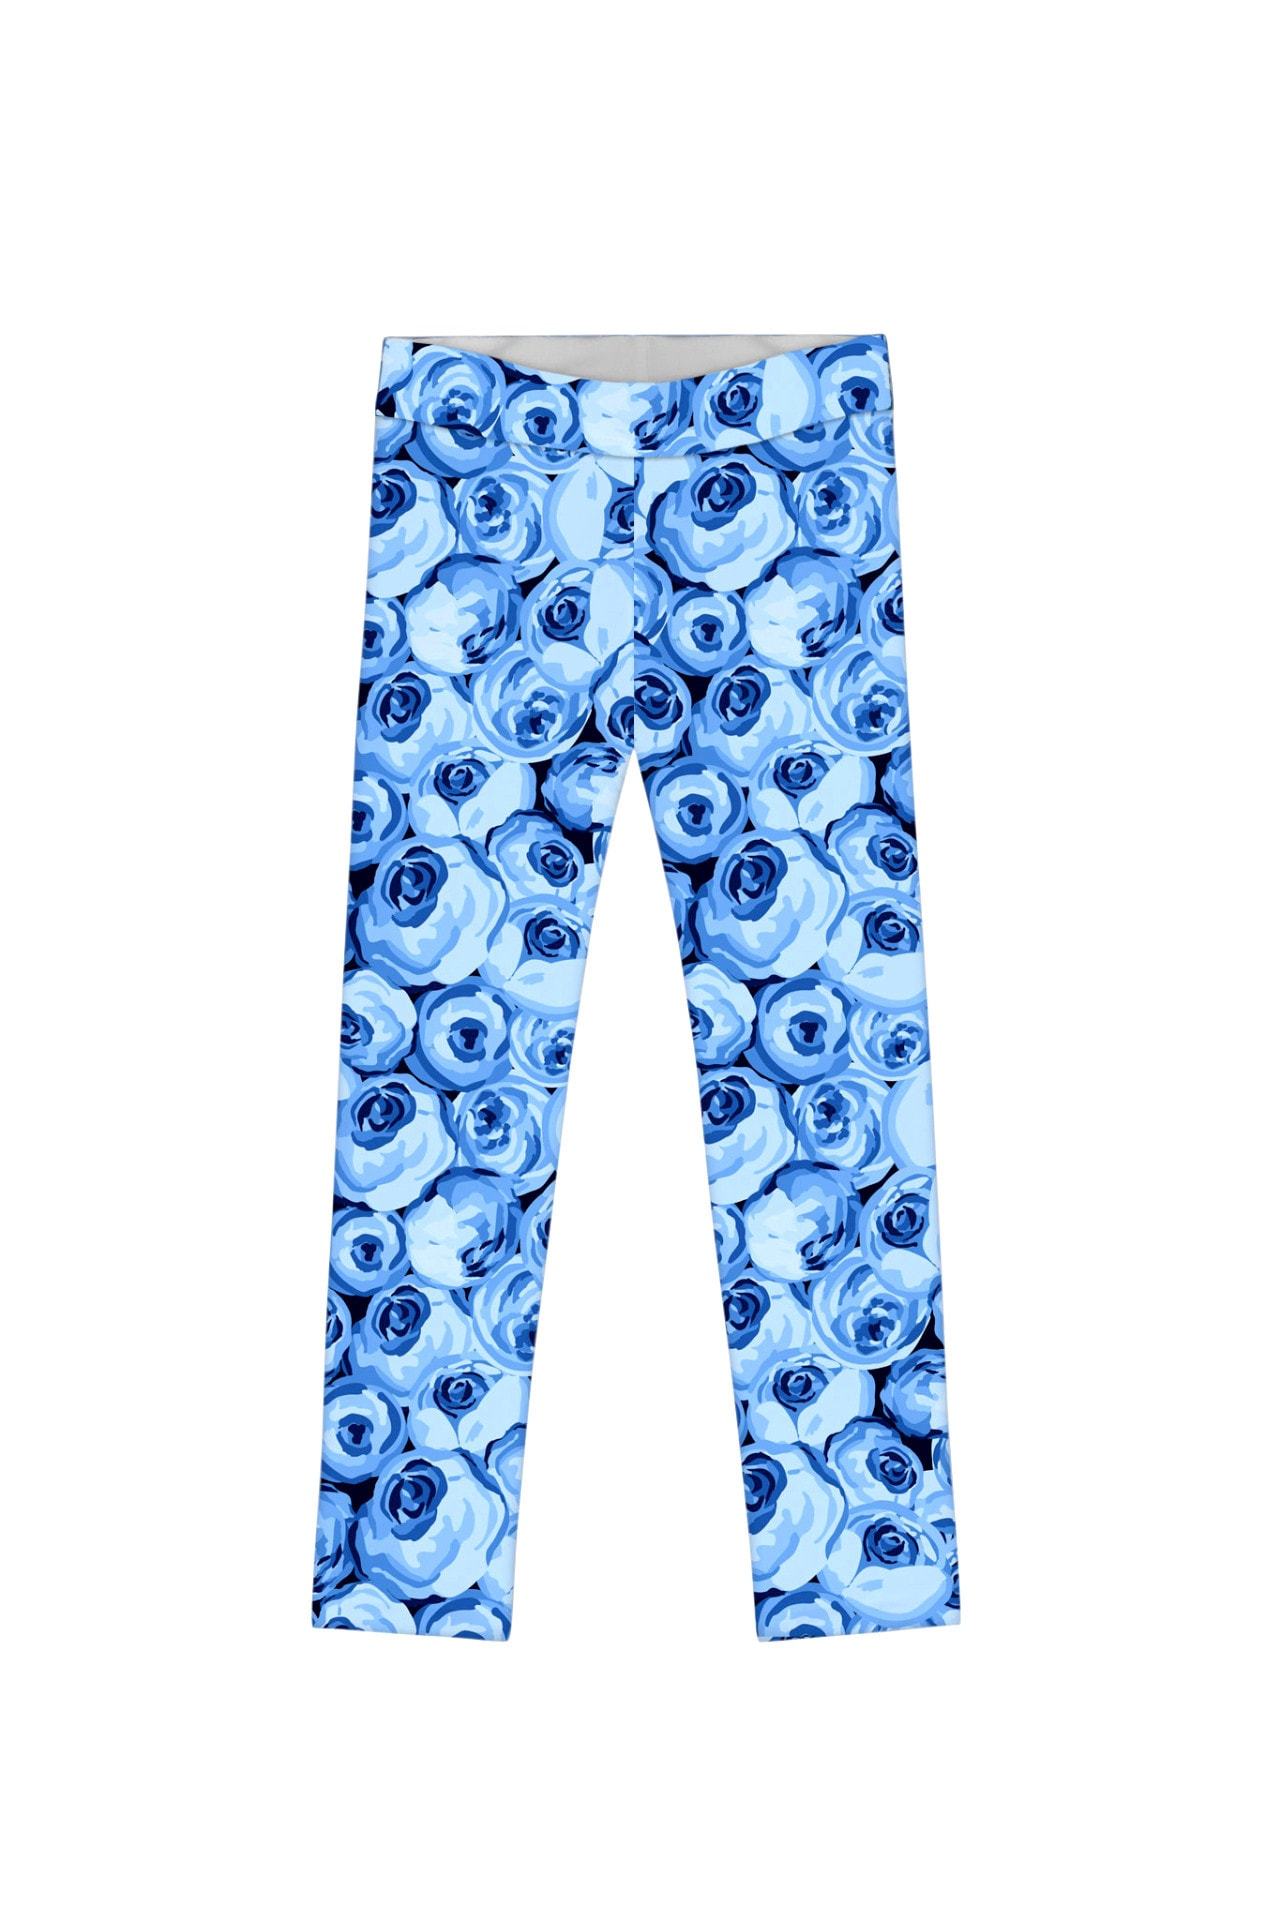 Whisper Lucy Stylish Blue Floral Graphic Print Leggings – Girls – Wish Fresh